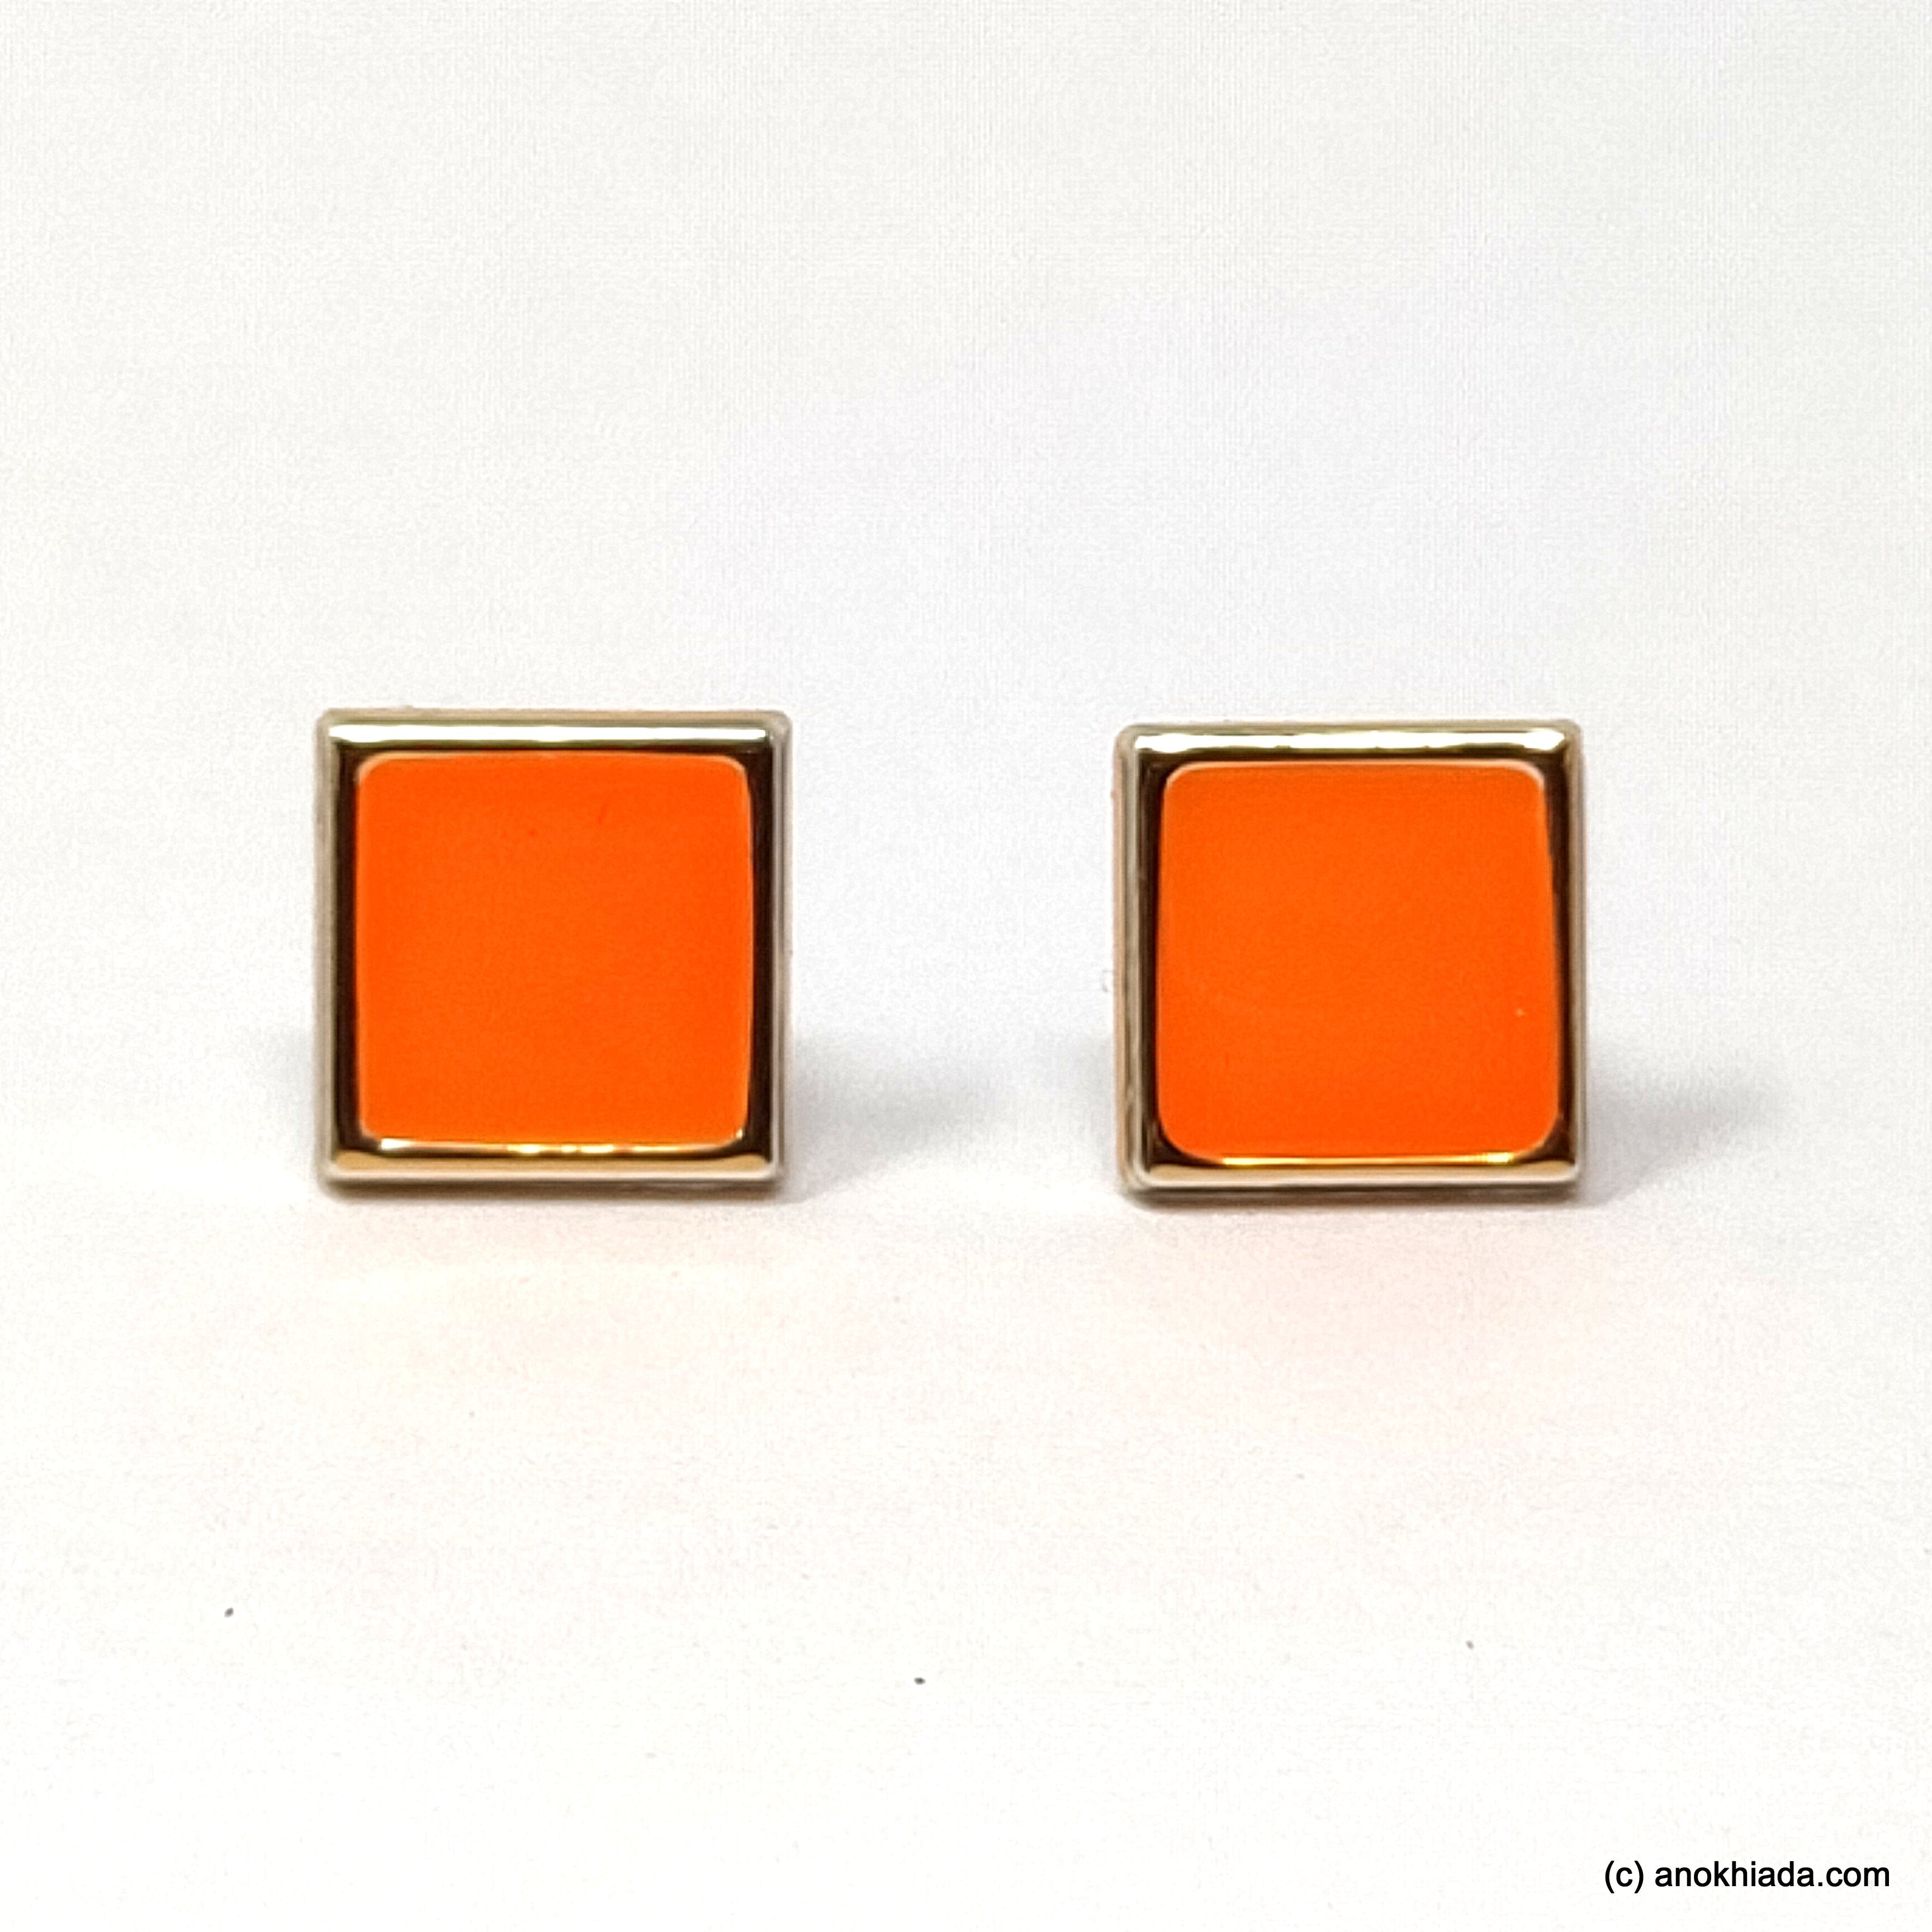 Anokhi Ada Orange Square Shaped Small Plastic Stud Earrings for